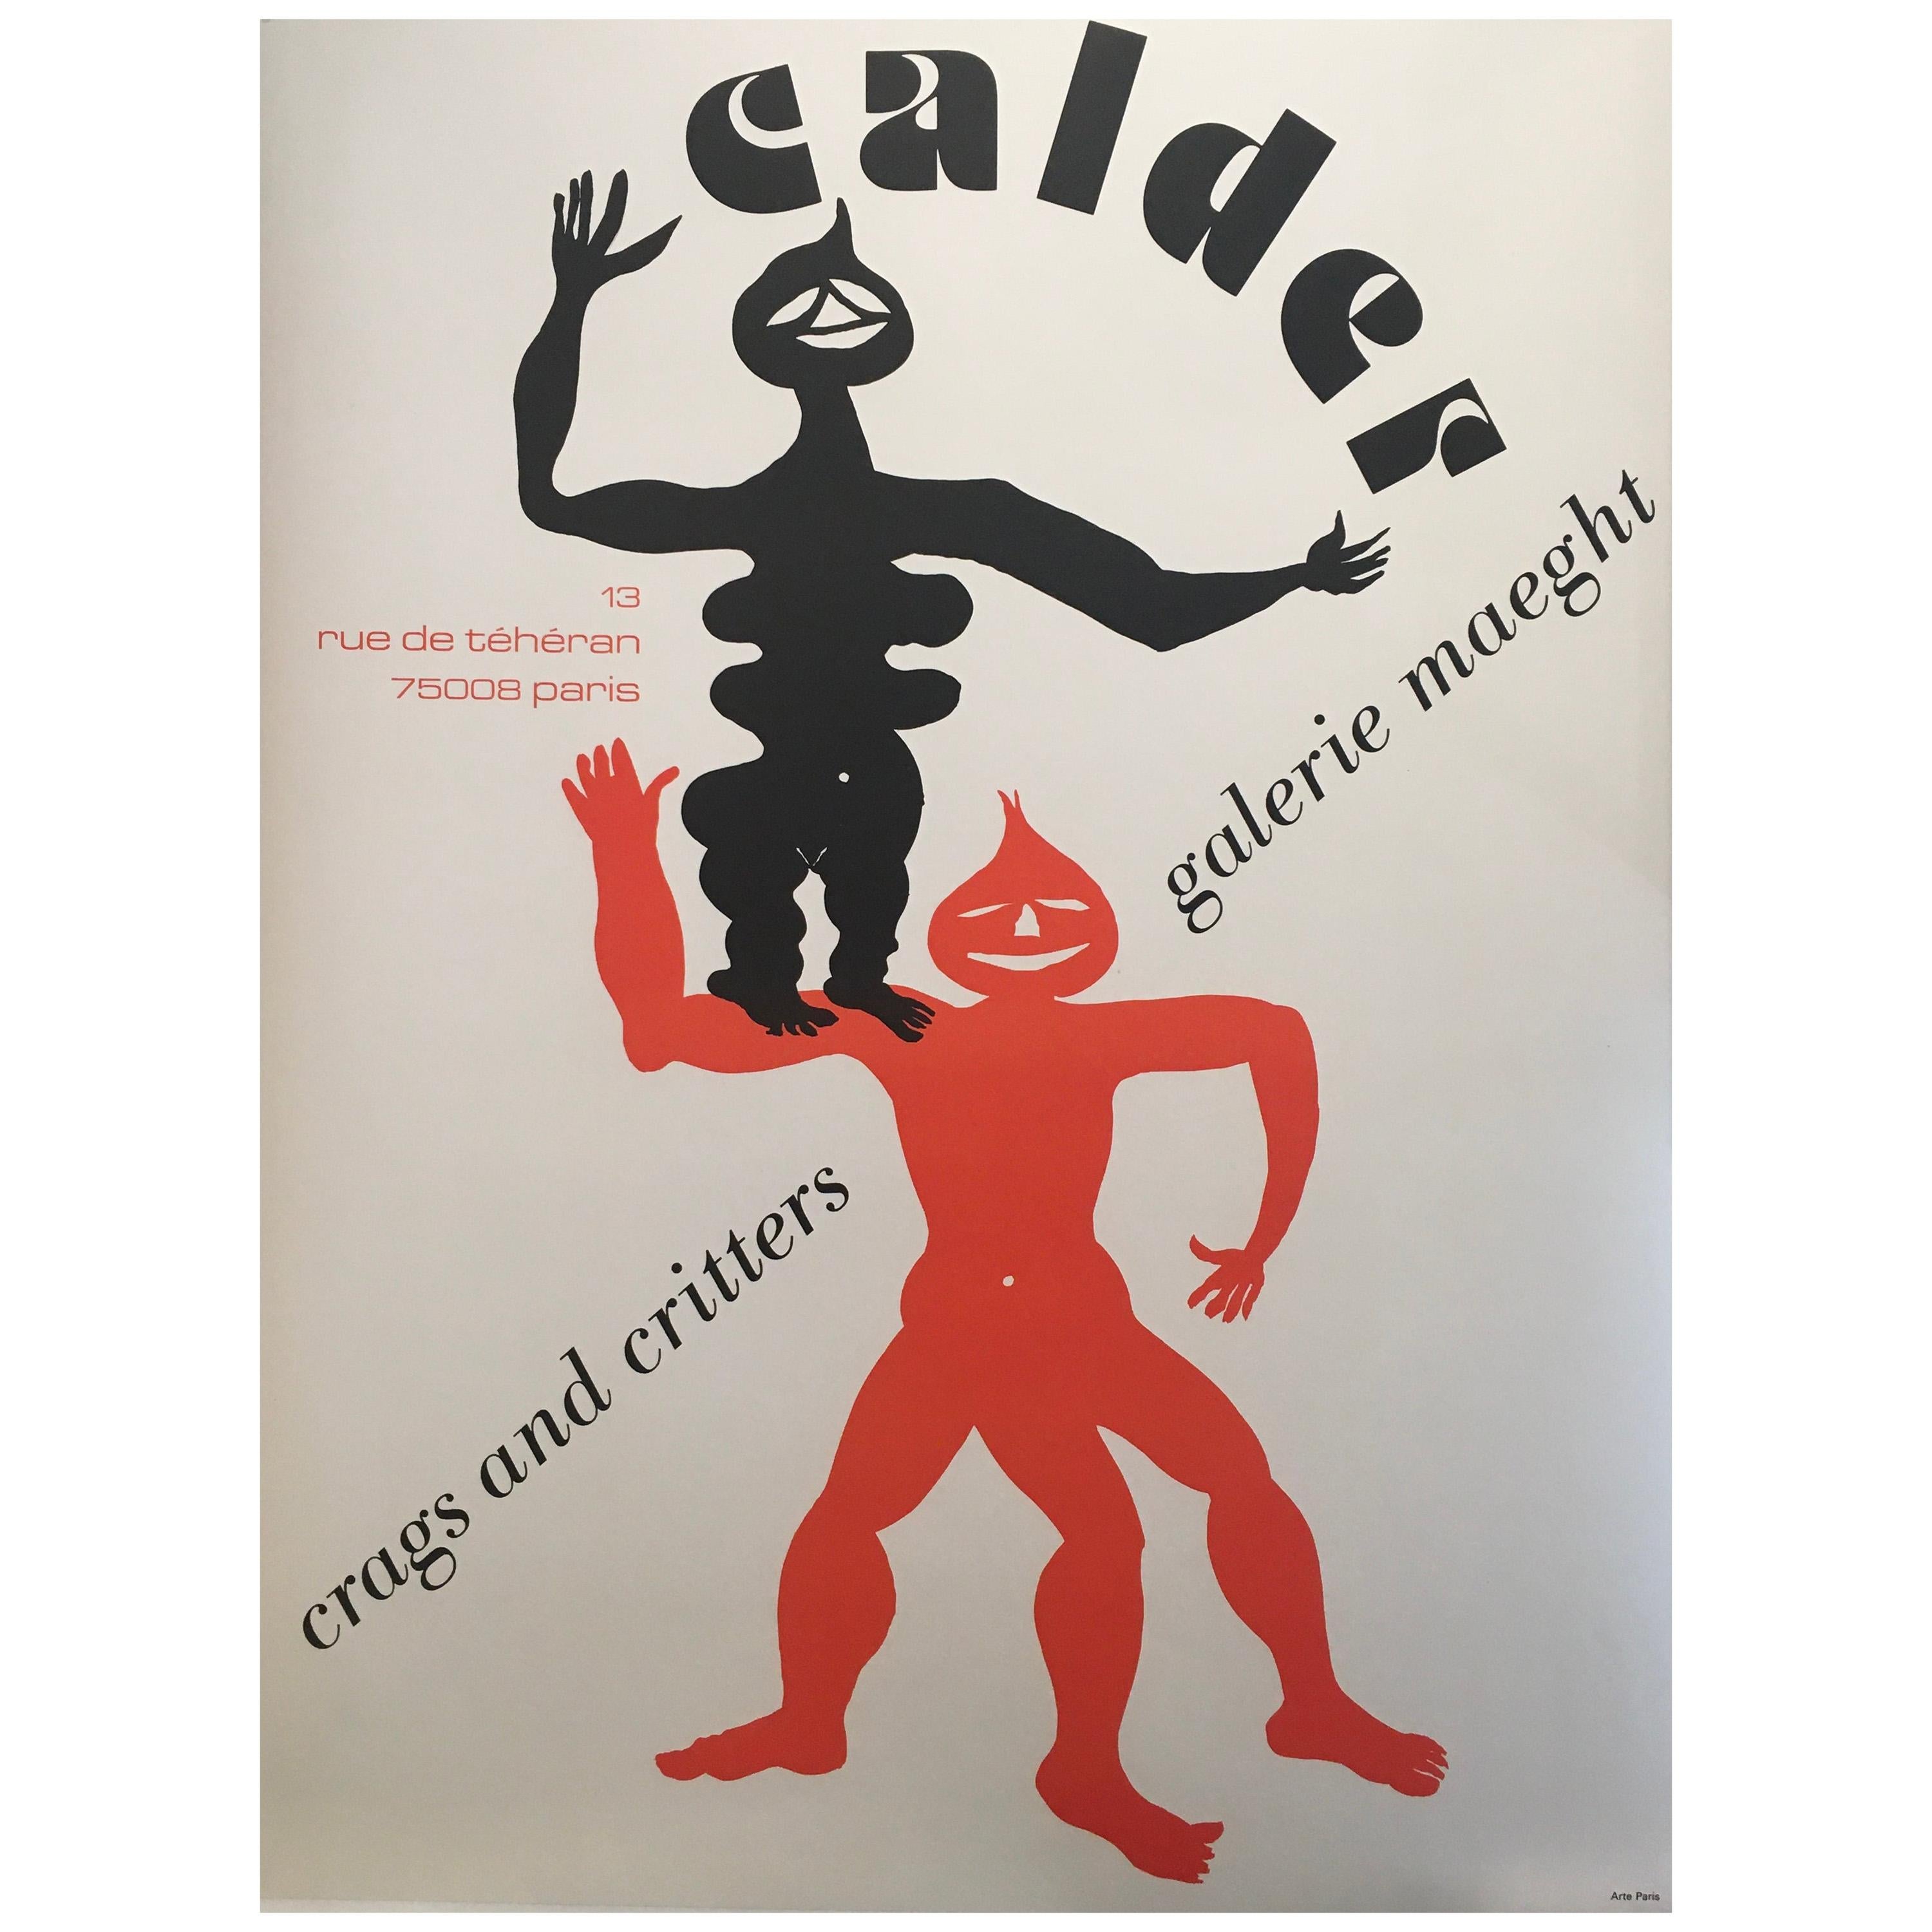 Original Vintage Poster, 'Calder Crags and Critters' 1975 Galerie Maeght For Sale